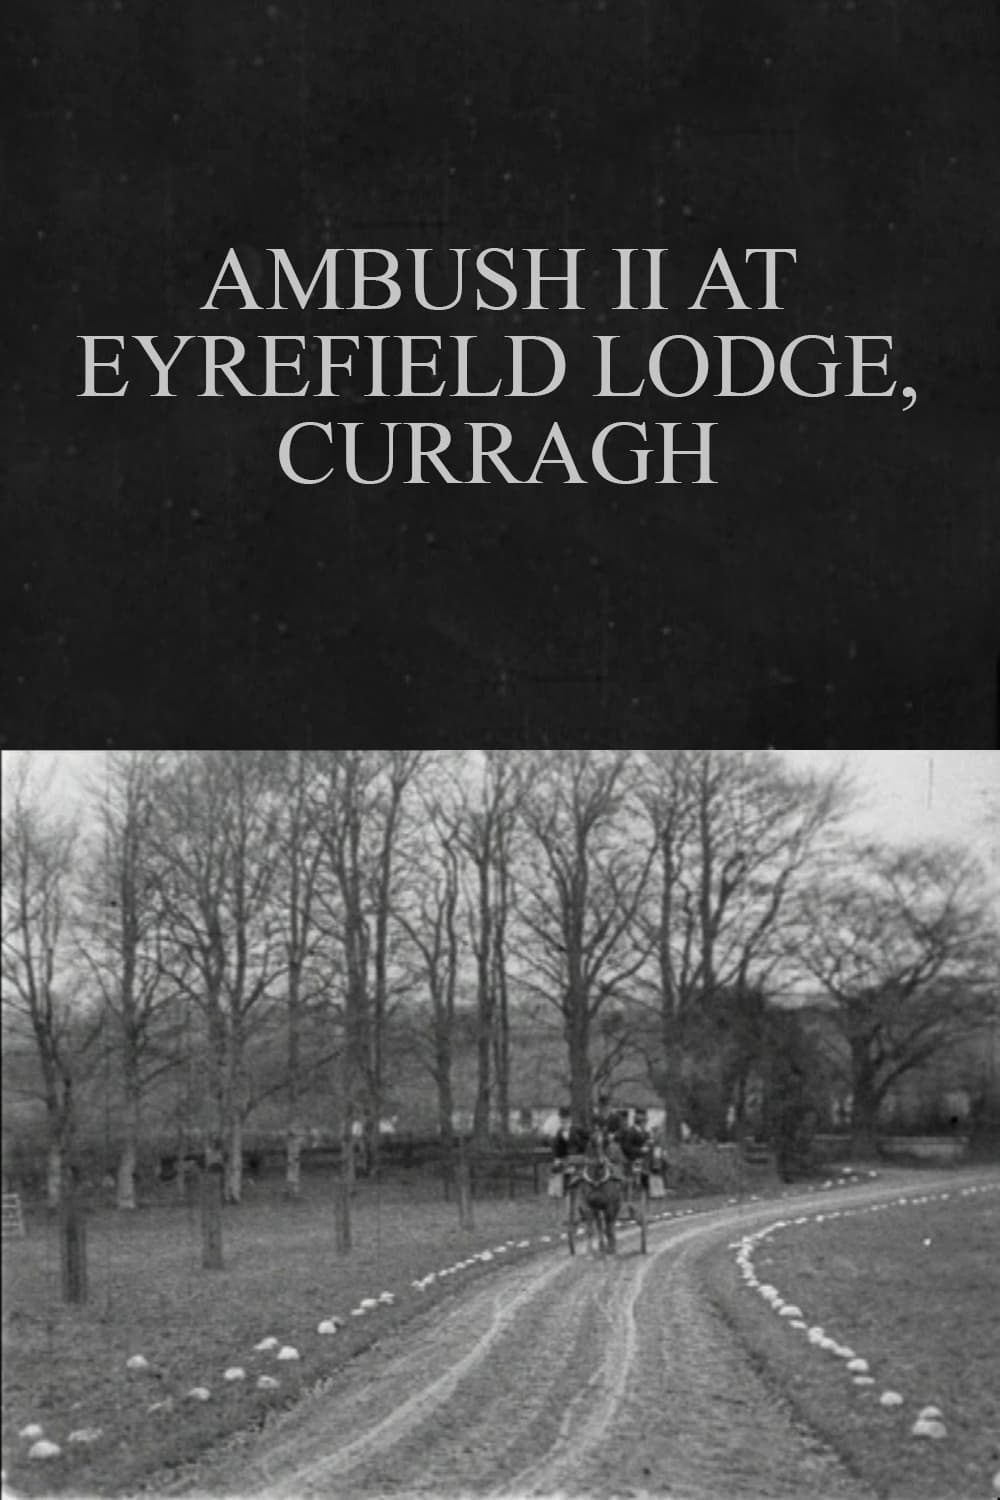 Ambush II at Eyrefield Lodge, Curragh